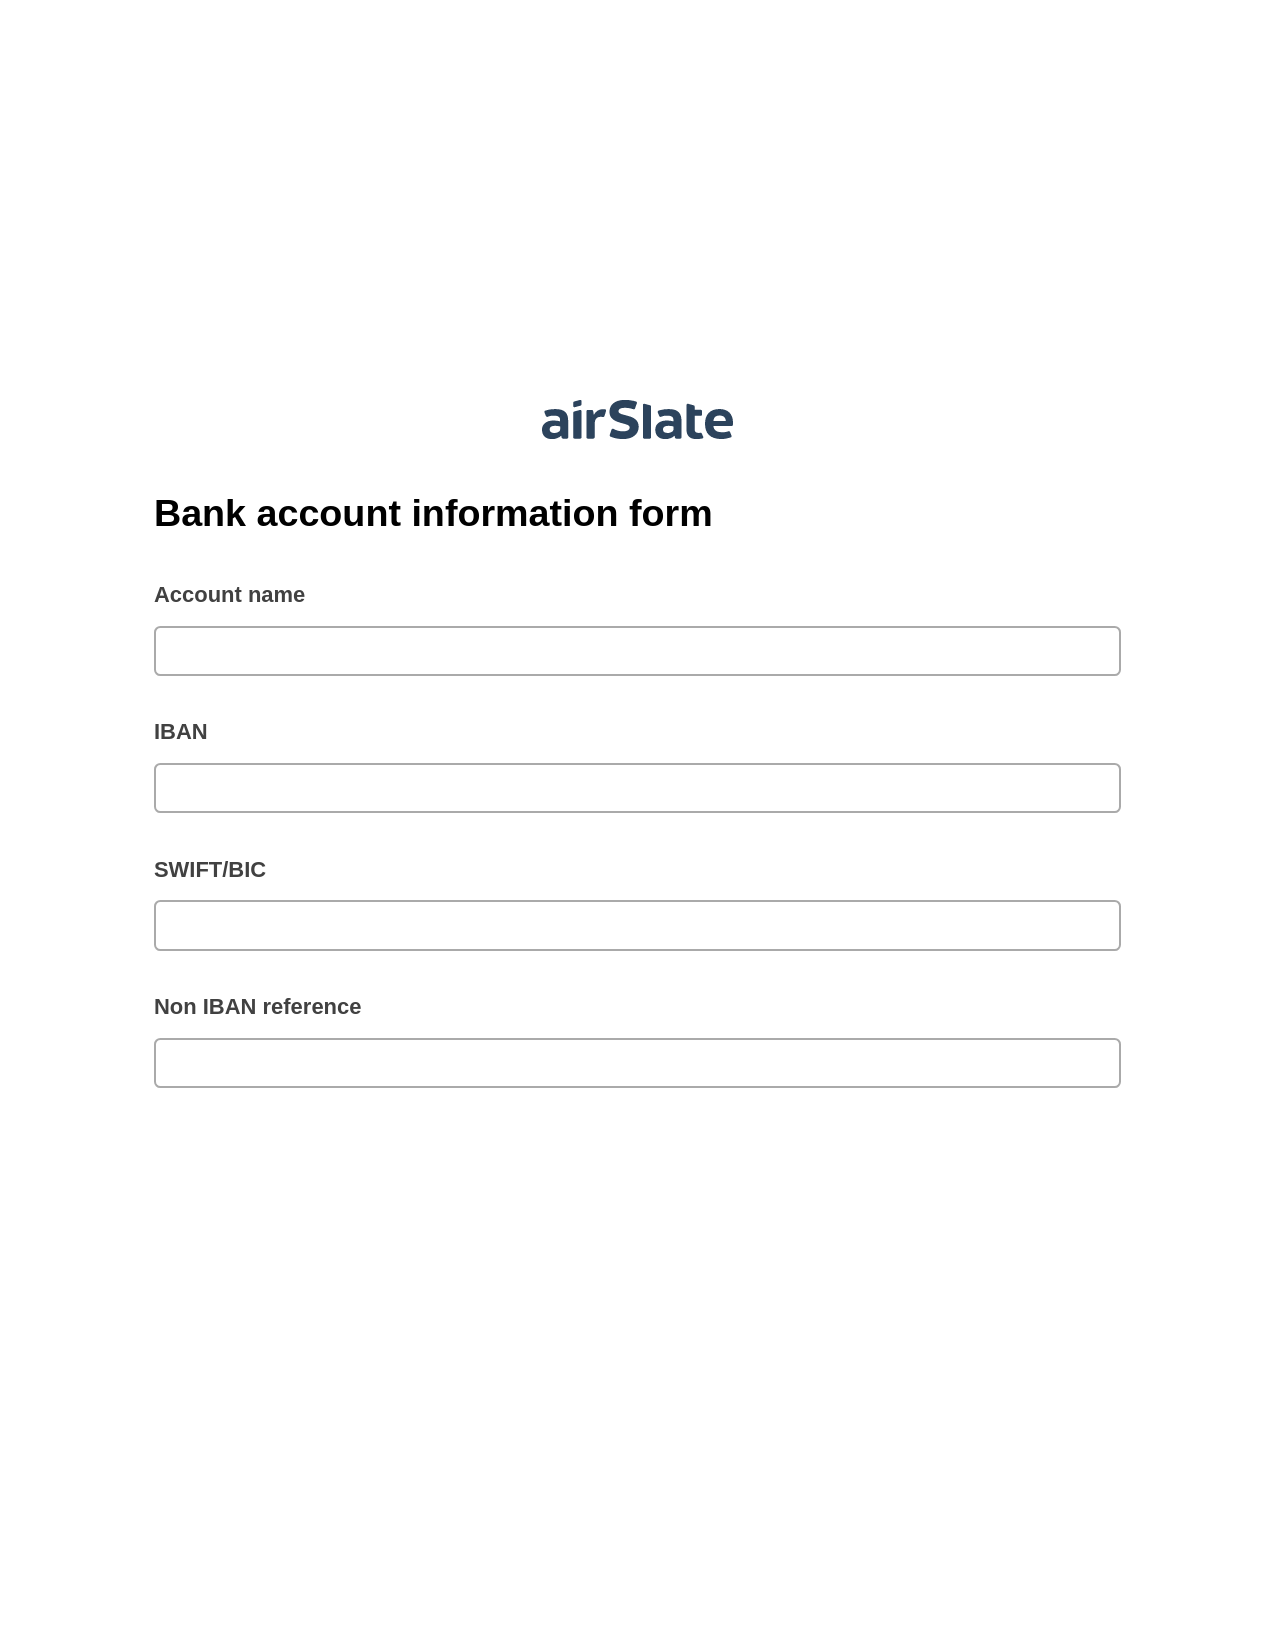 Multirole Bank account information form Pre-fill Slate from MS Dynamics 365 Records Bot, Slack Notification Bot, Webhook Postfinish Bot